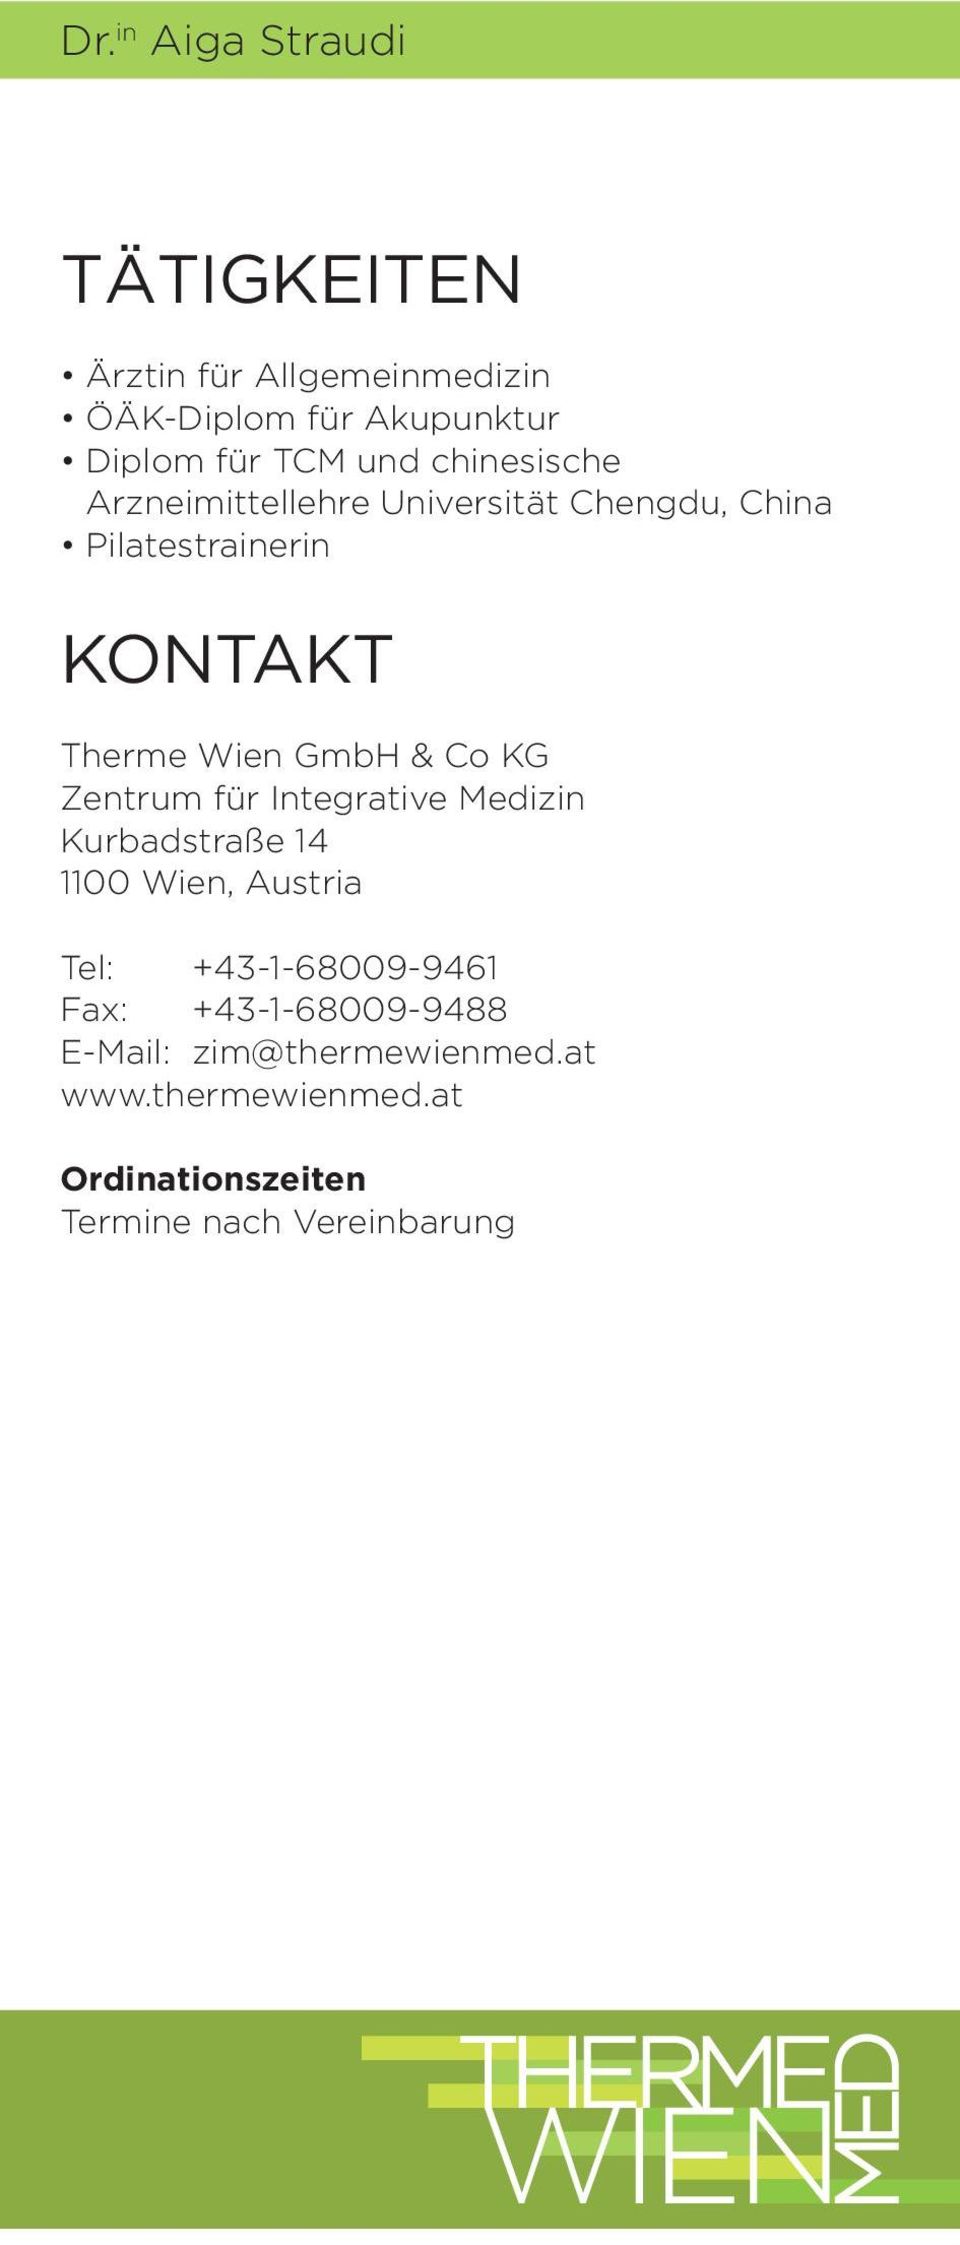 & Co KG Zentrum für Integrative Medizin Kurbadstraße 14 1100 Wien, Austria Tel: +43-1-68009-9461 Fax: